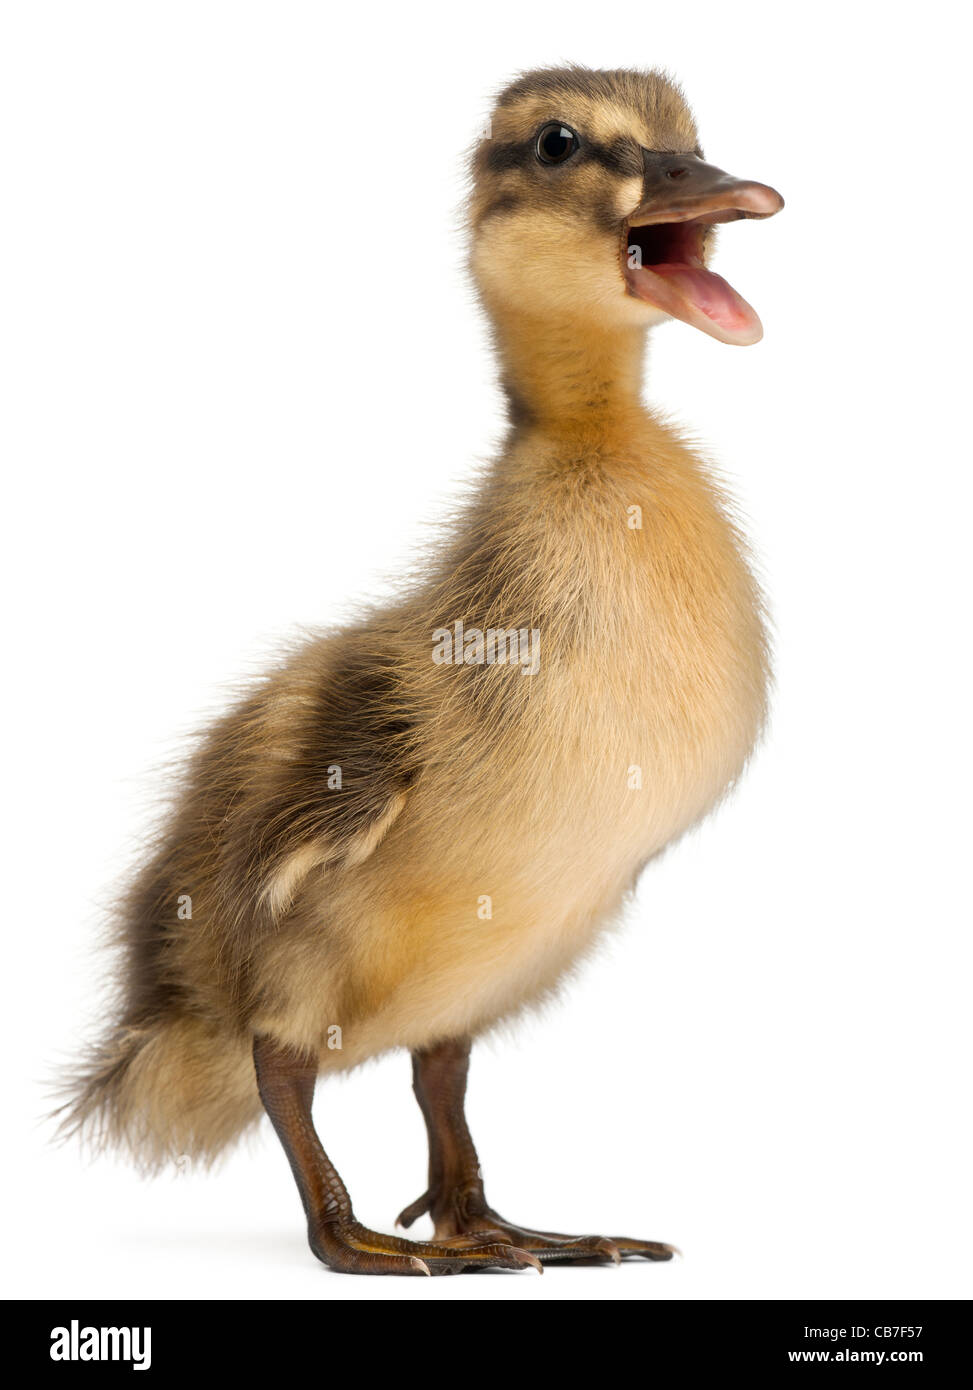 Mallard or wild duck, Anas platyrhynchos, 3 weeks old, in front of white background Stock Photo